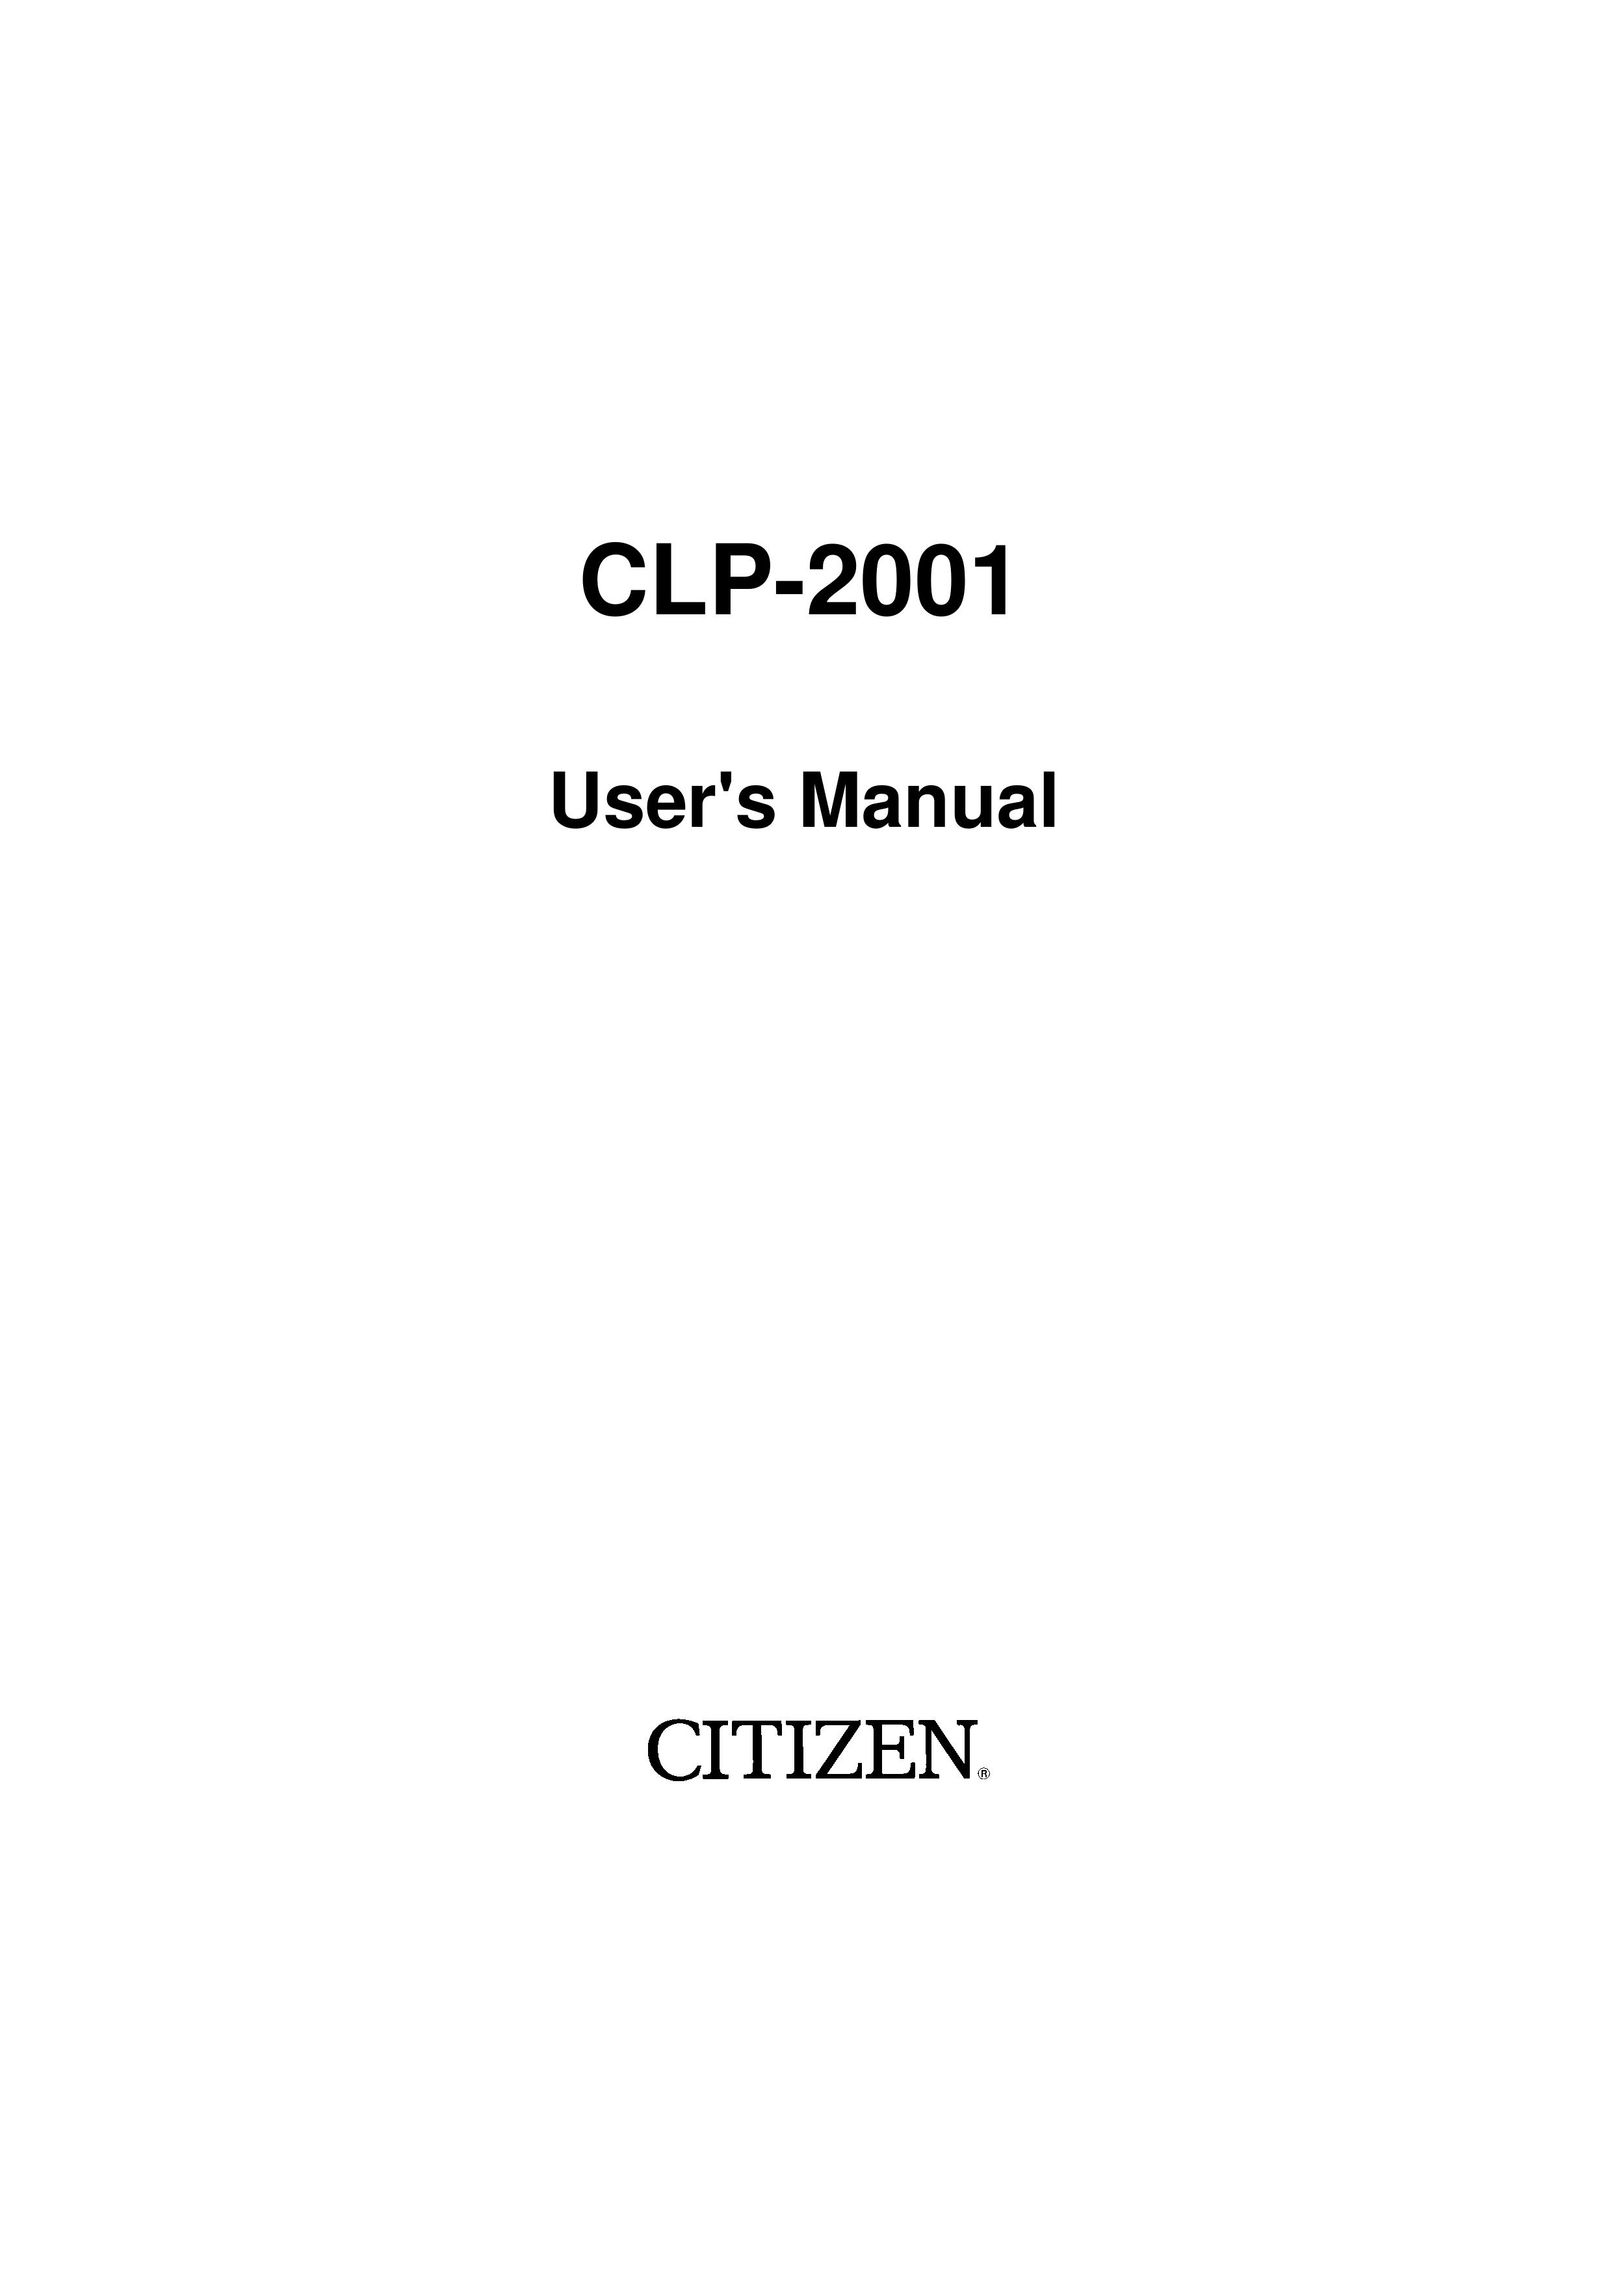 Citizen CLP-2001 Printer User Manual